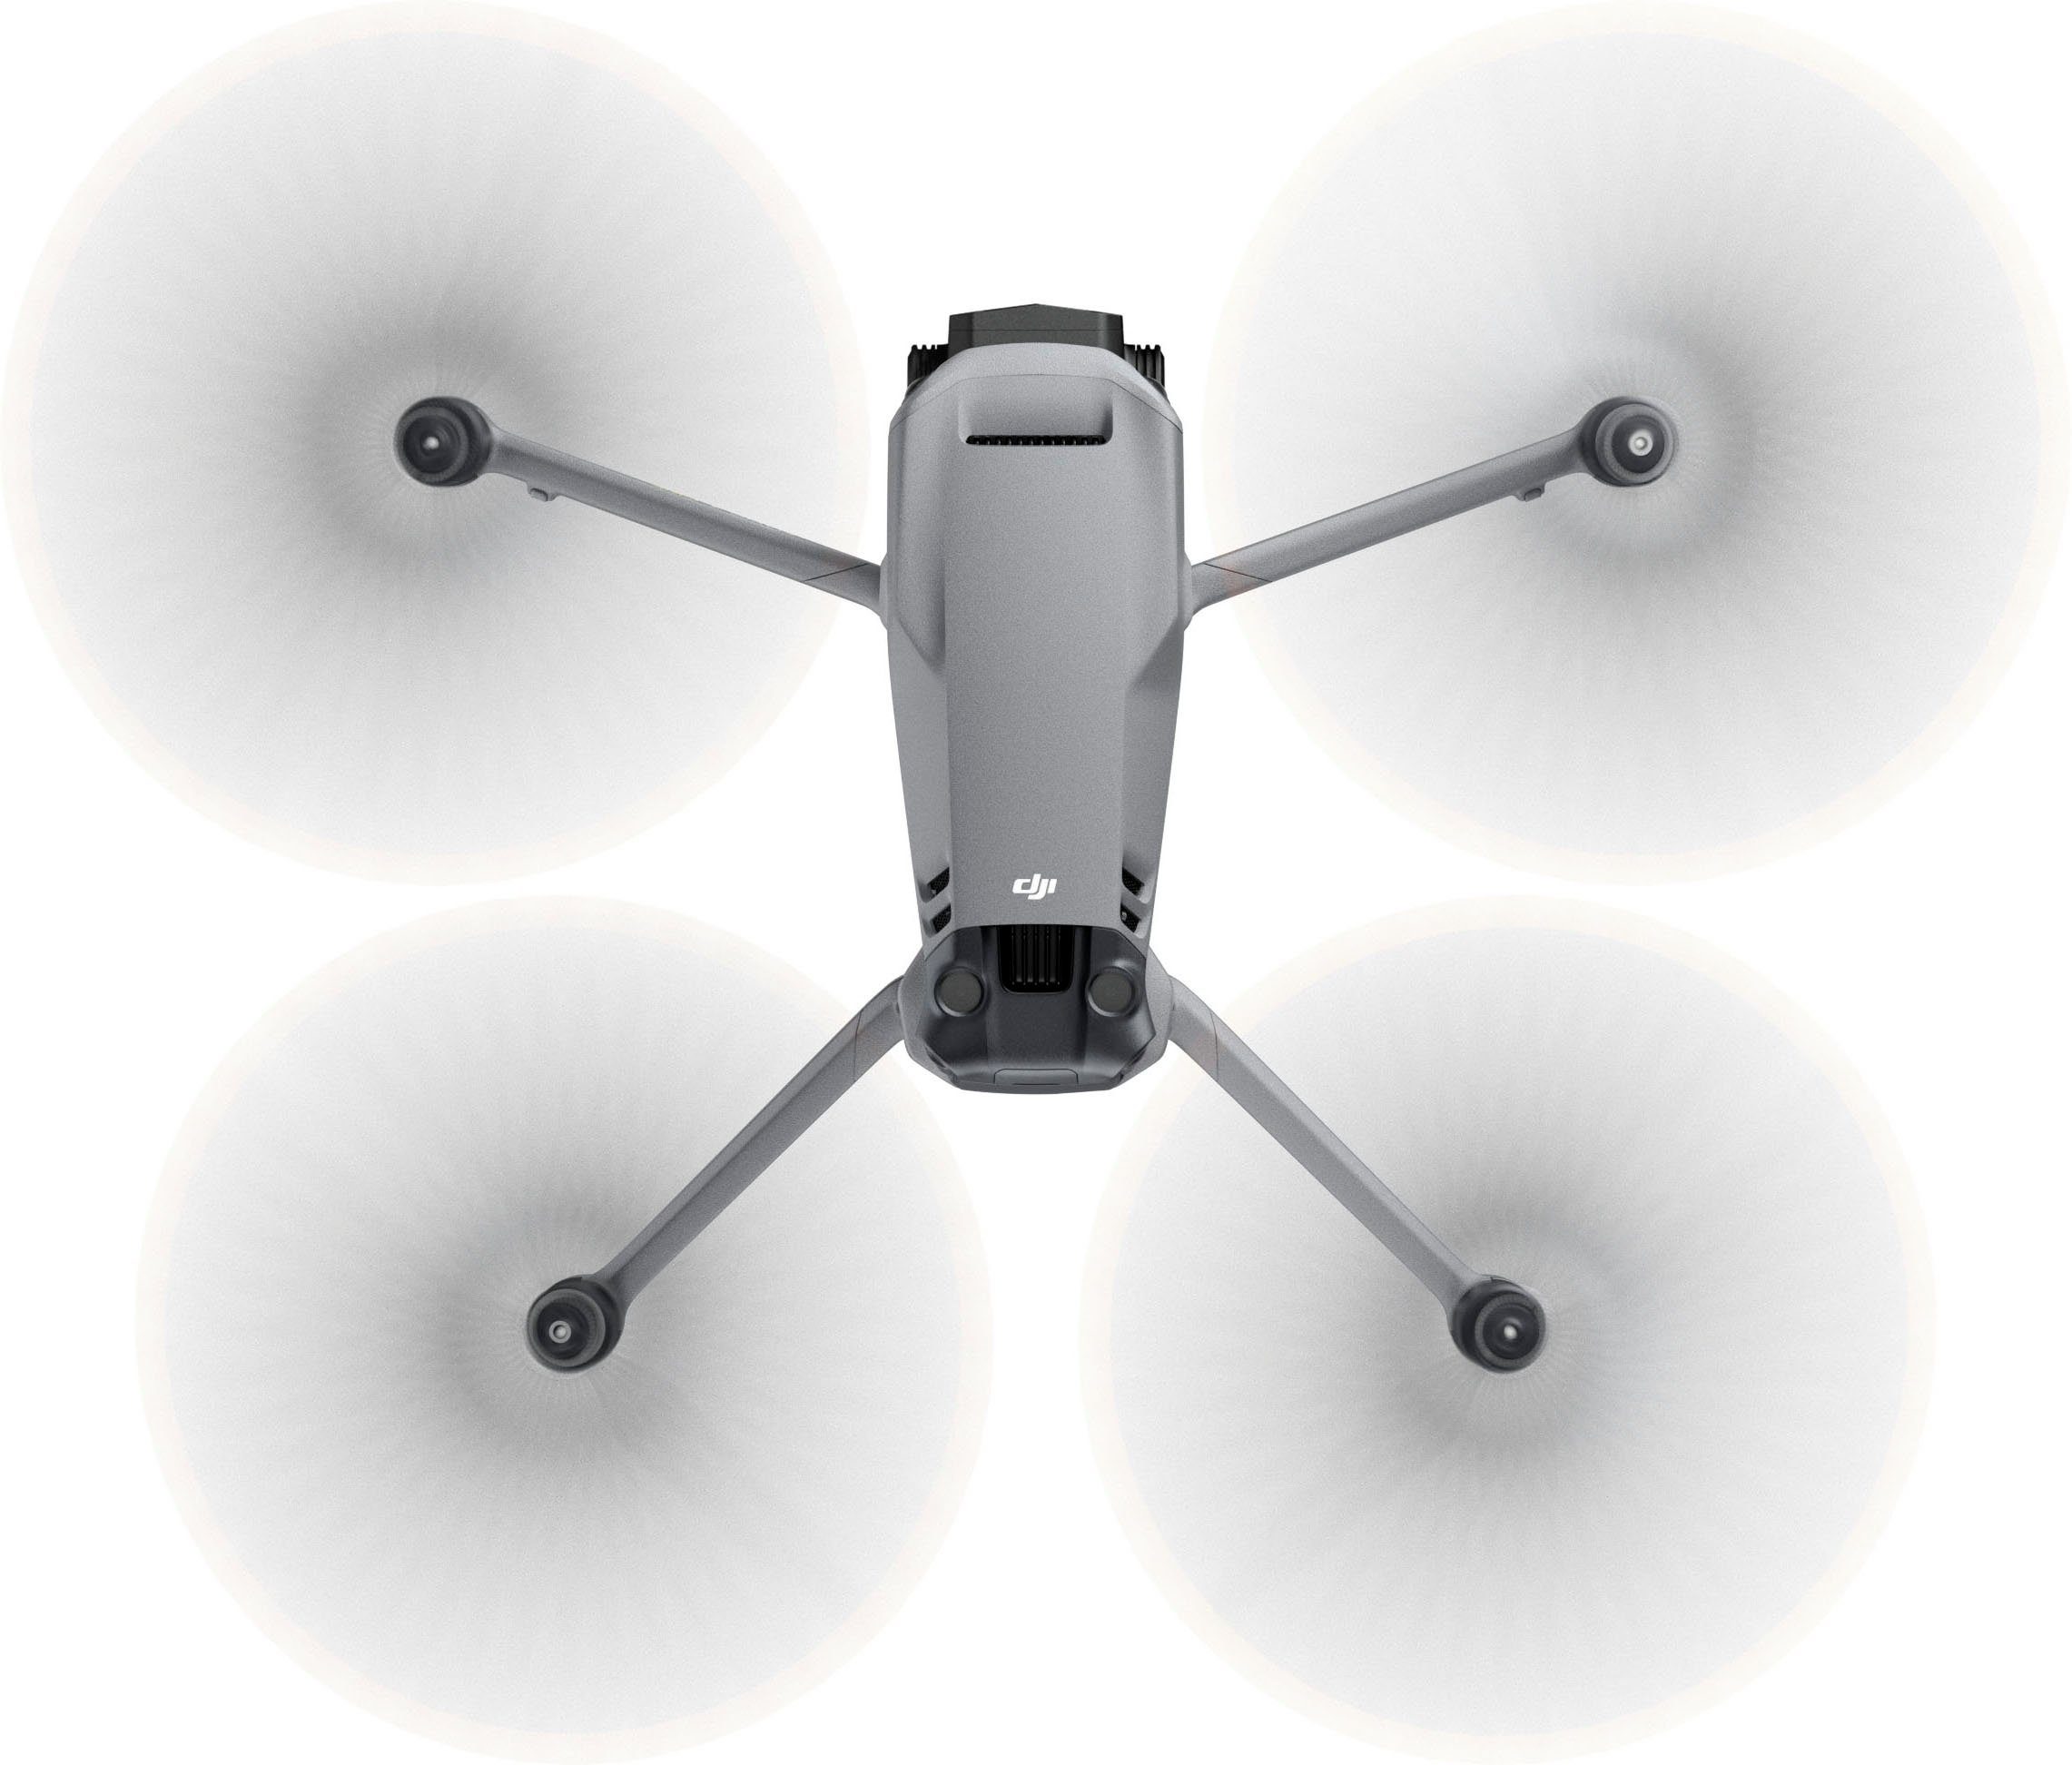 Mavic 3 DJI (5,1K) Pro Drohne Cine Premium DJI